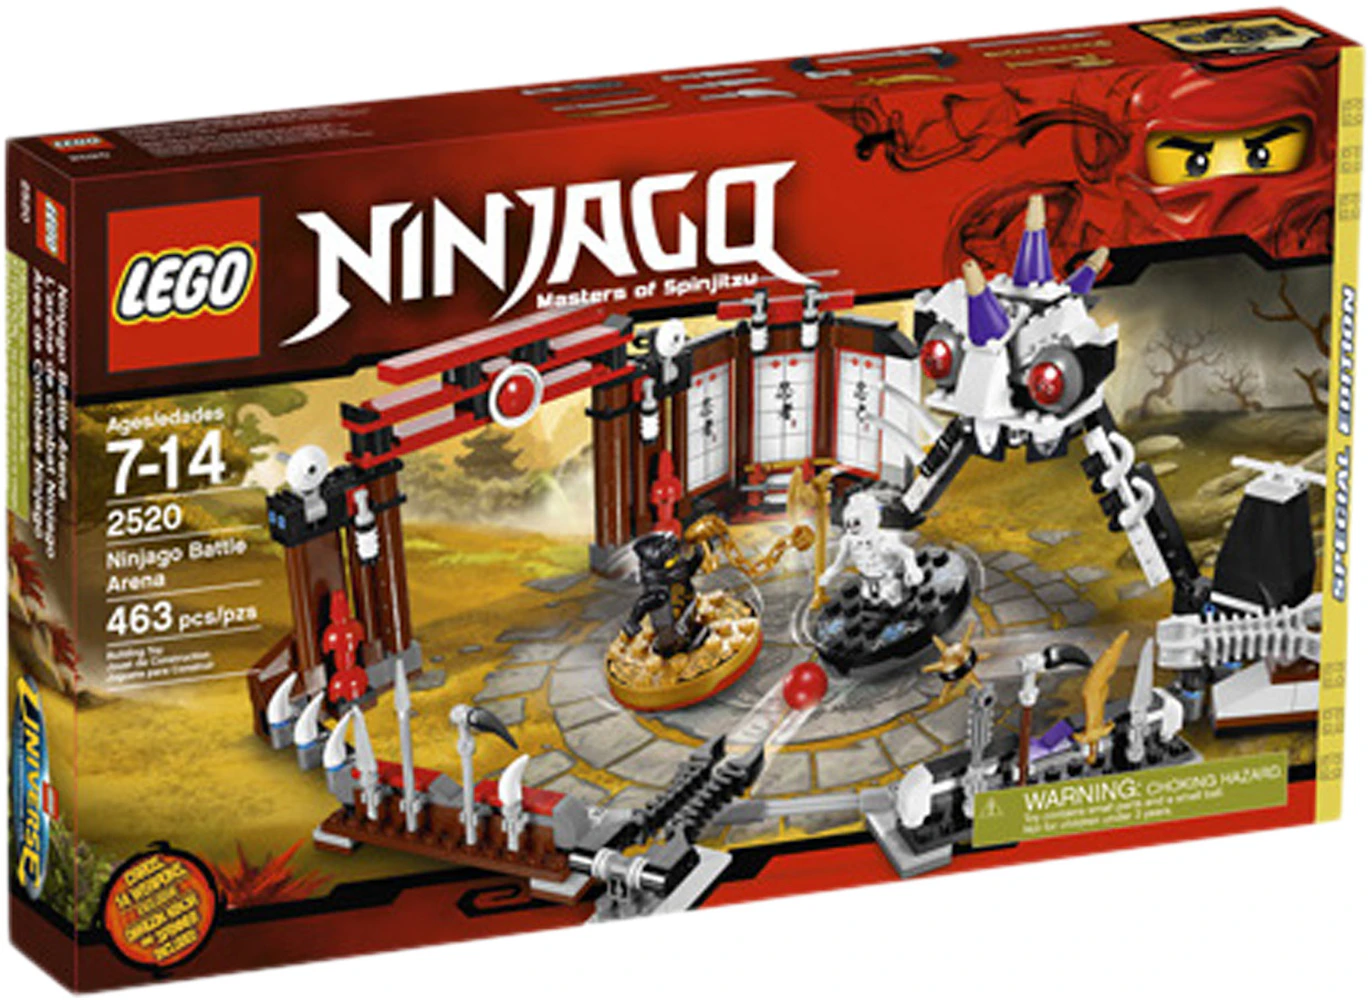 Myrde Synes godt om Intens LEGO Ninjago Ninjago Battle Arena Set 2520 - US